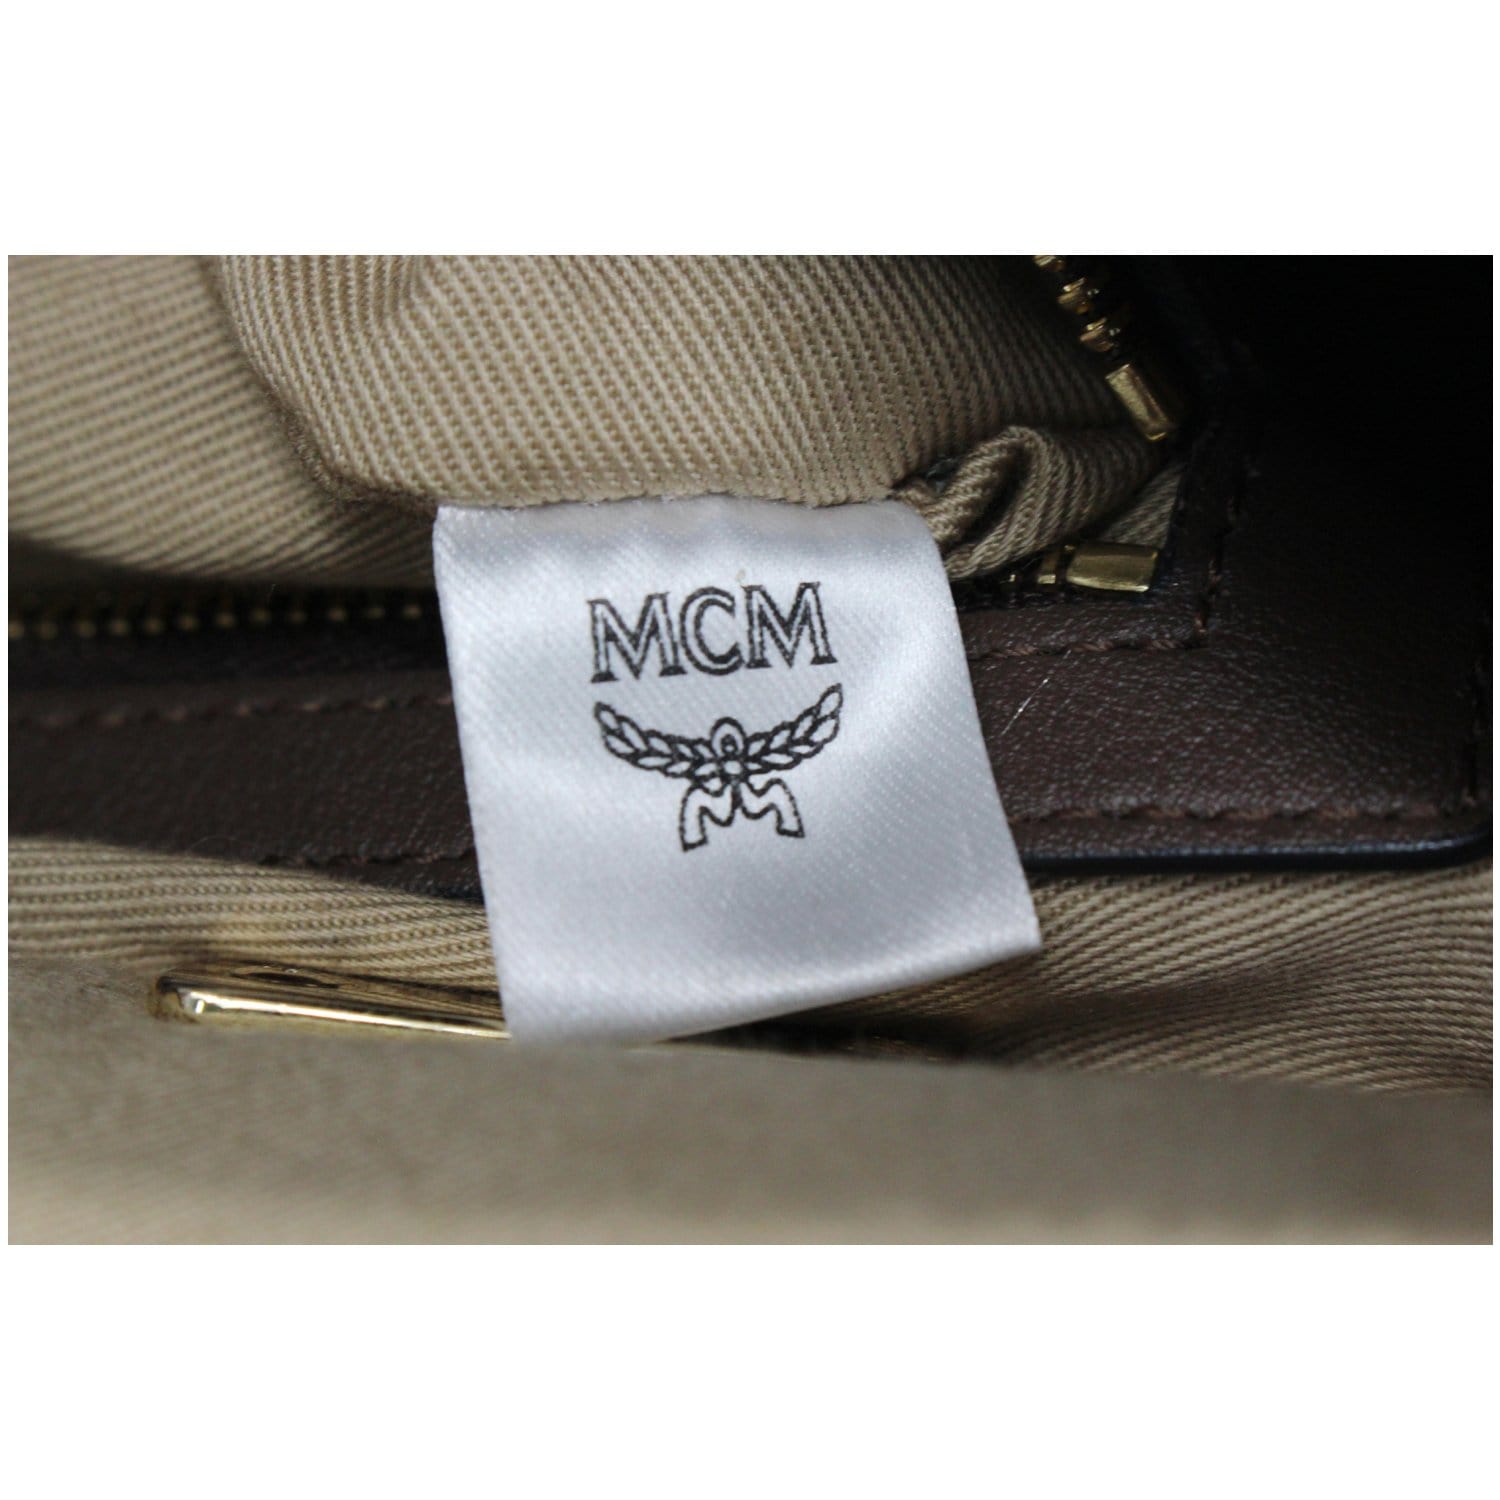 MCM Cognac Monogram Visetos Boston Bag 921mcm69  White leather backpack,  Bags designer fashion, Bags